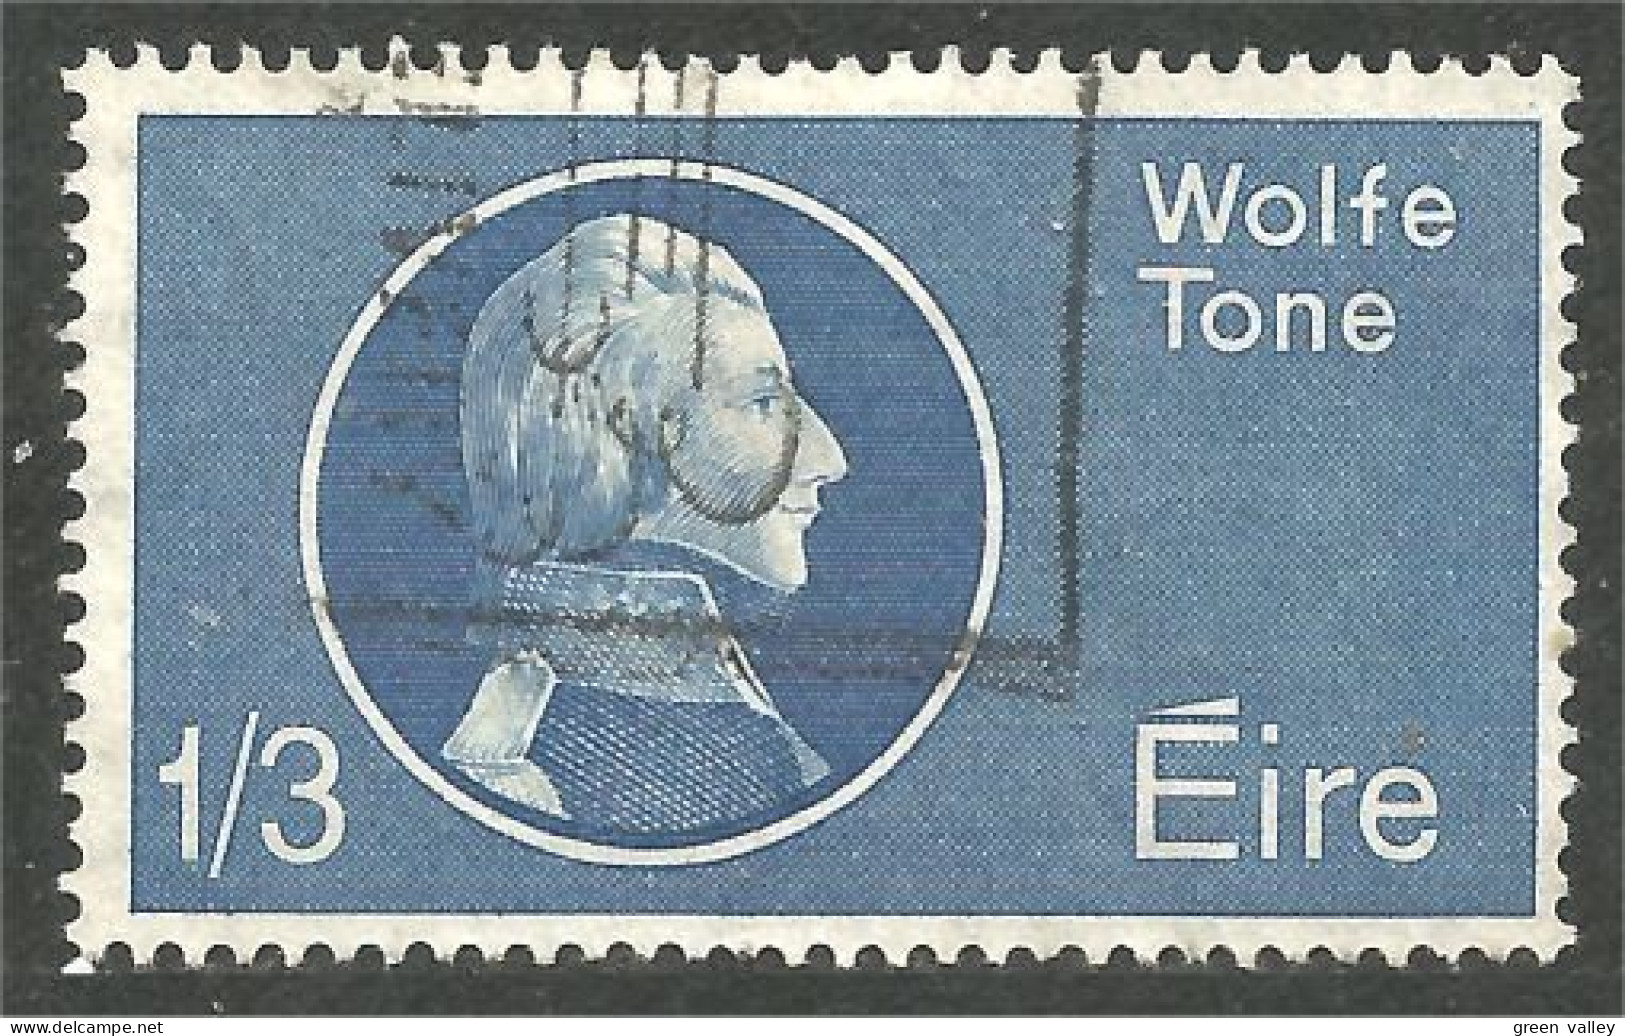 510 Ireland Theobald Wolfe Tone Revolutionist (IRL-140) - Used Stamps